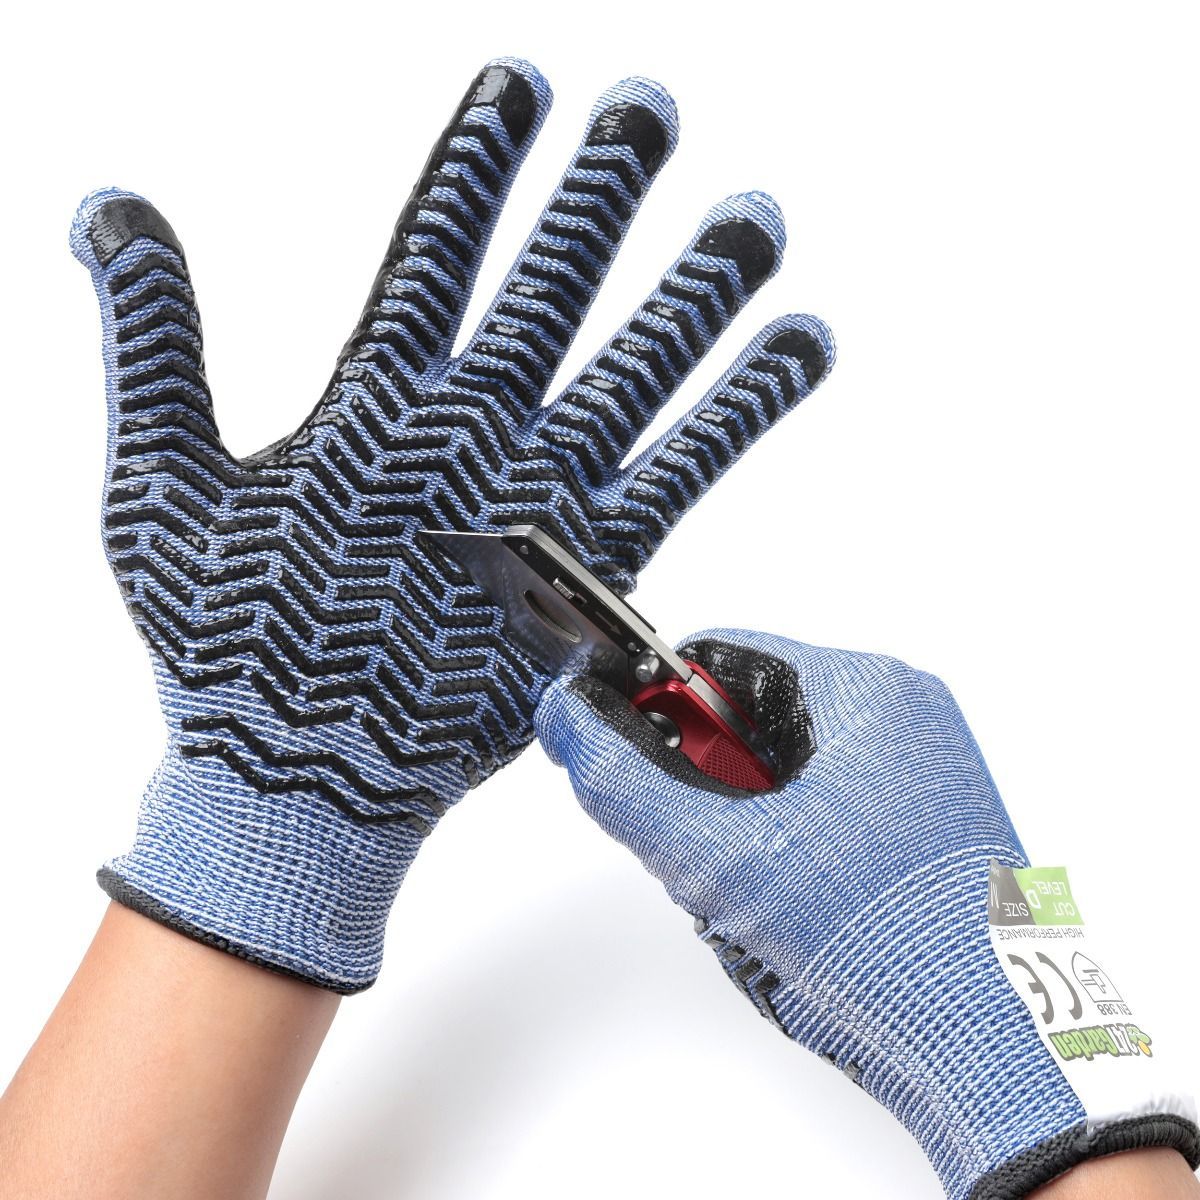 https://www.247garden.com/media/catalog/product/cache/cb621b1fe8c671835cc1f23c5ac19dc5/2/4/247garden-cut-proof-gloves.jpg